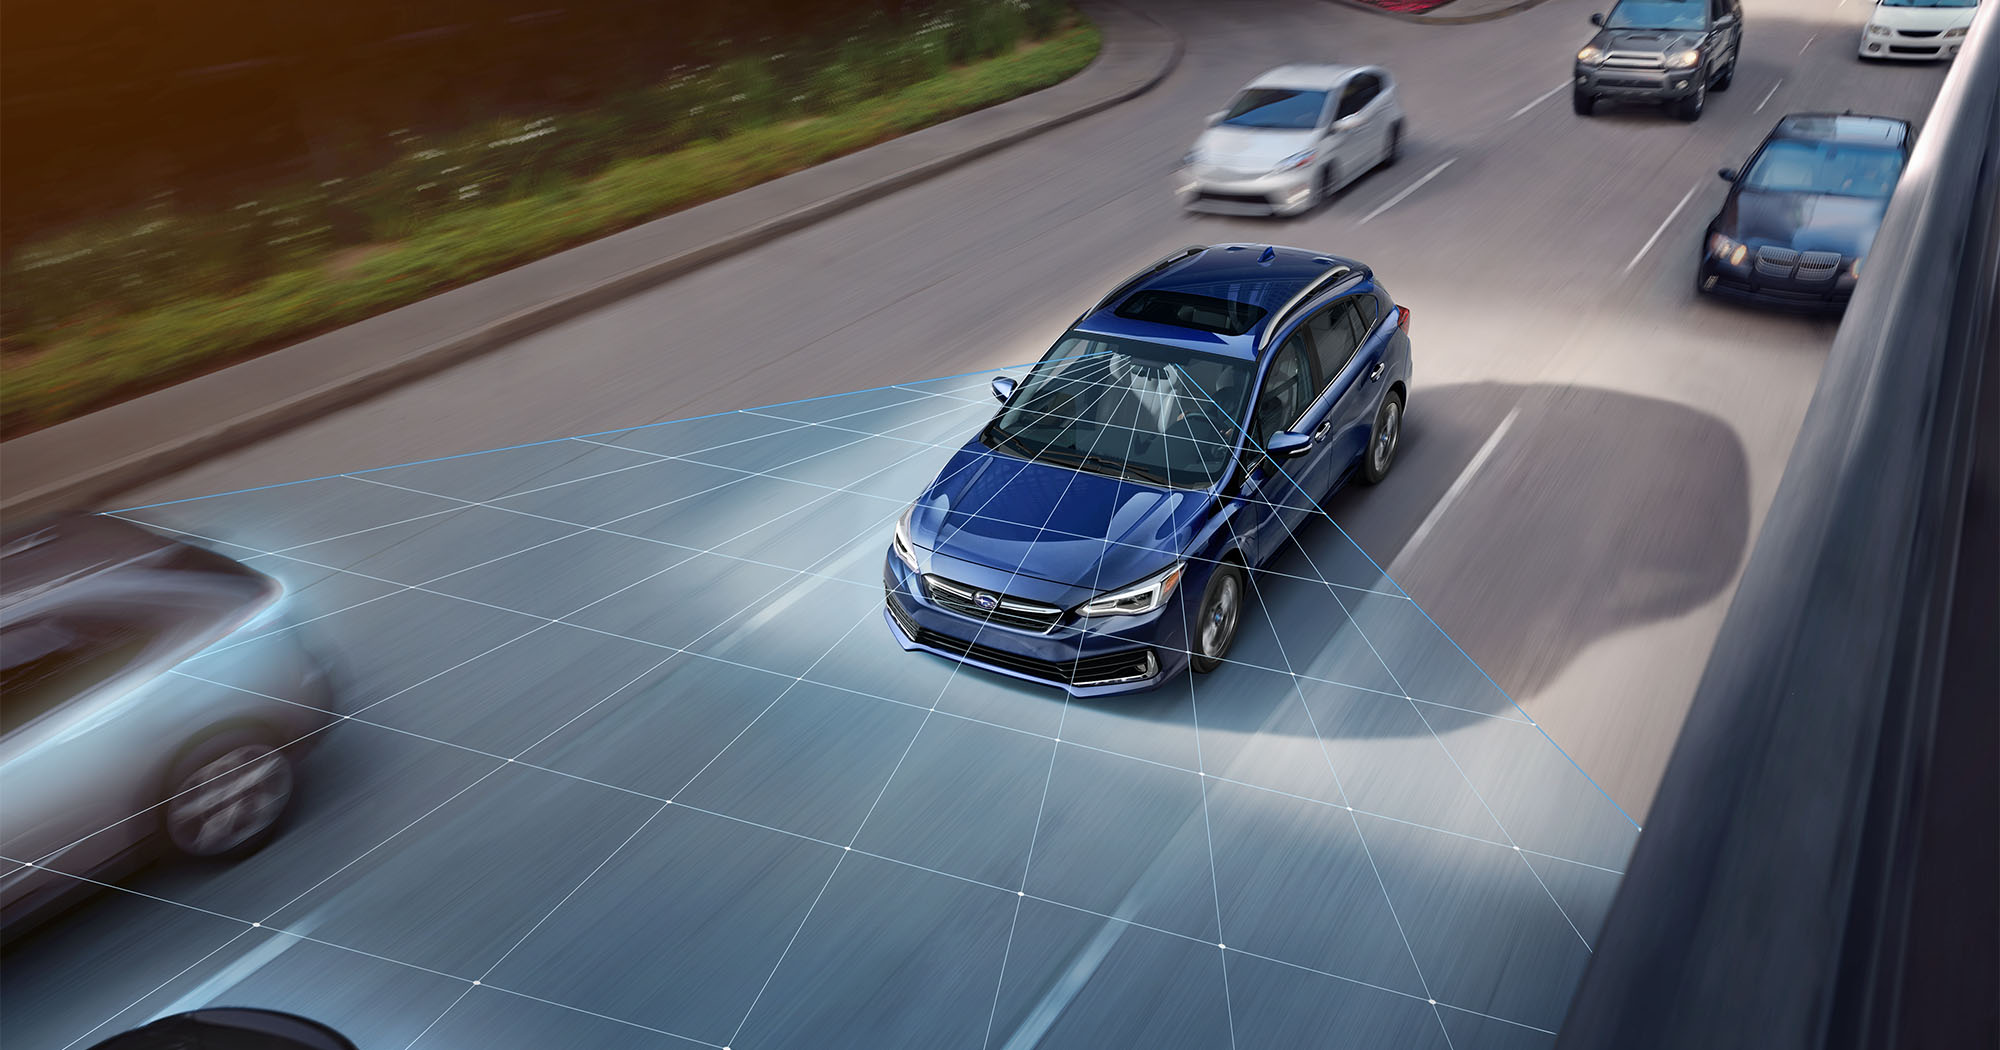  A photo illustration showing the EyeSight Driver Assist Technology on the 2023 Impreza.